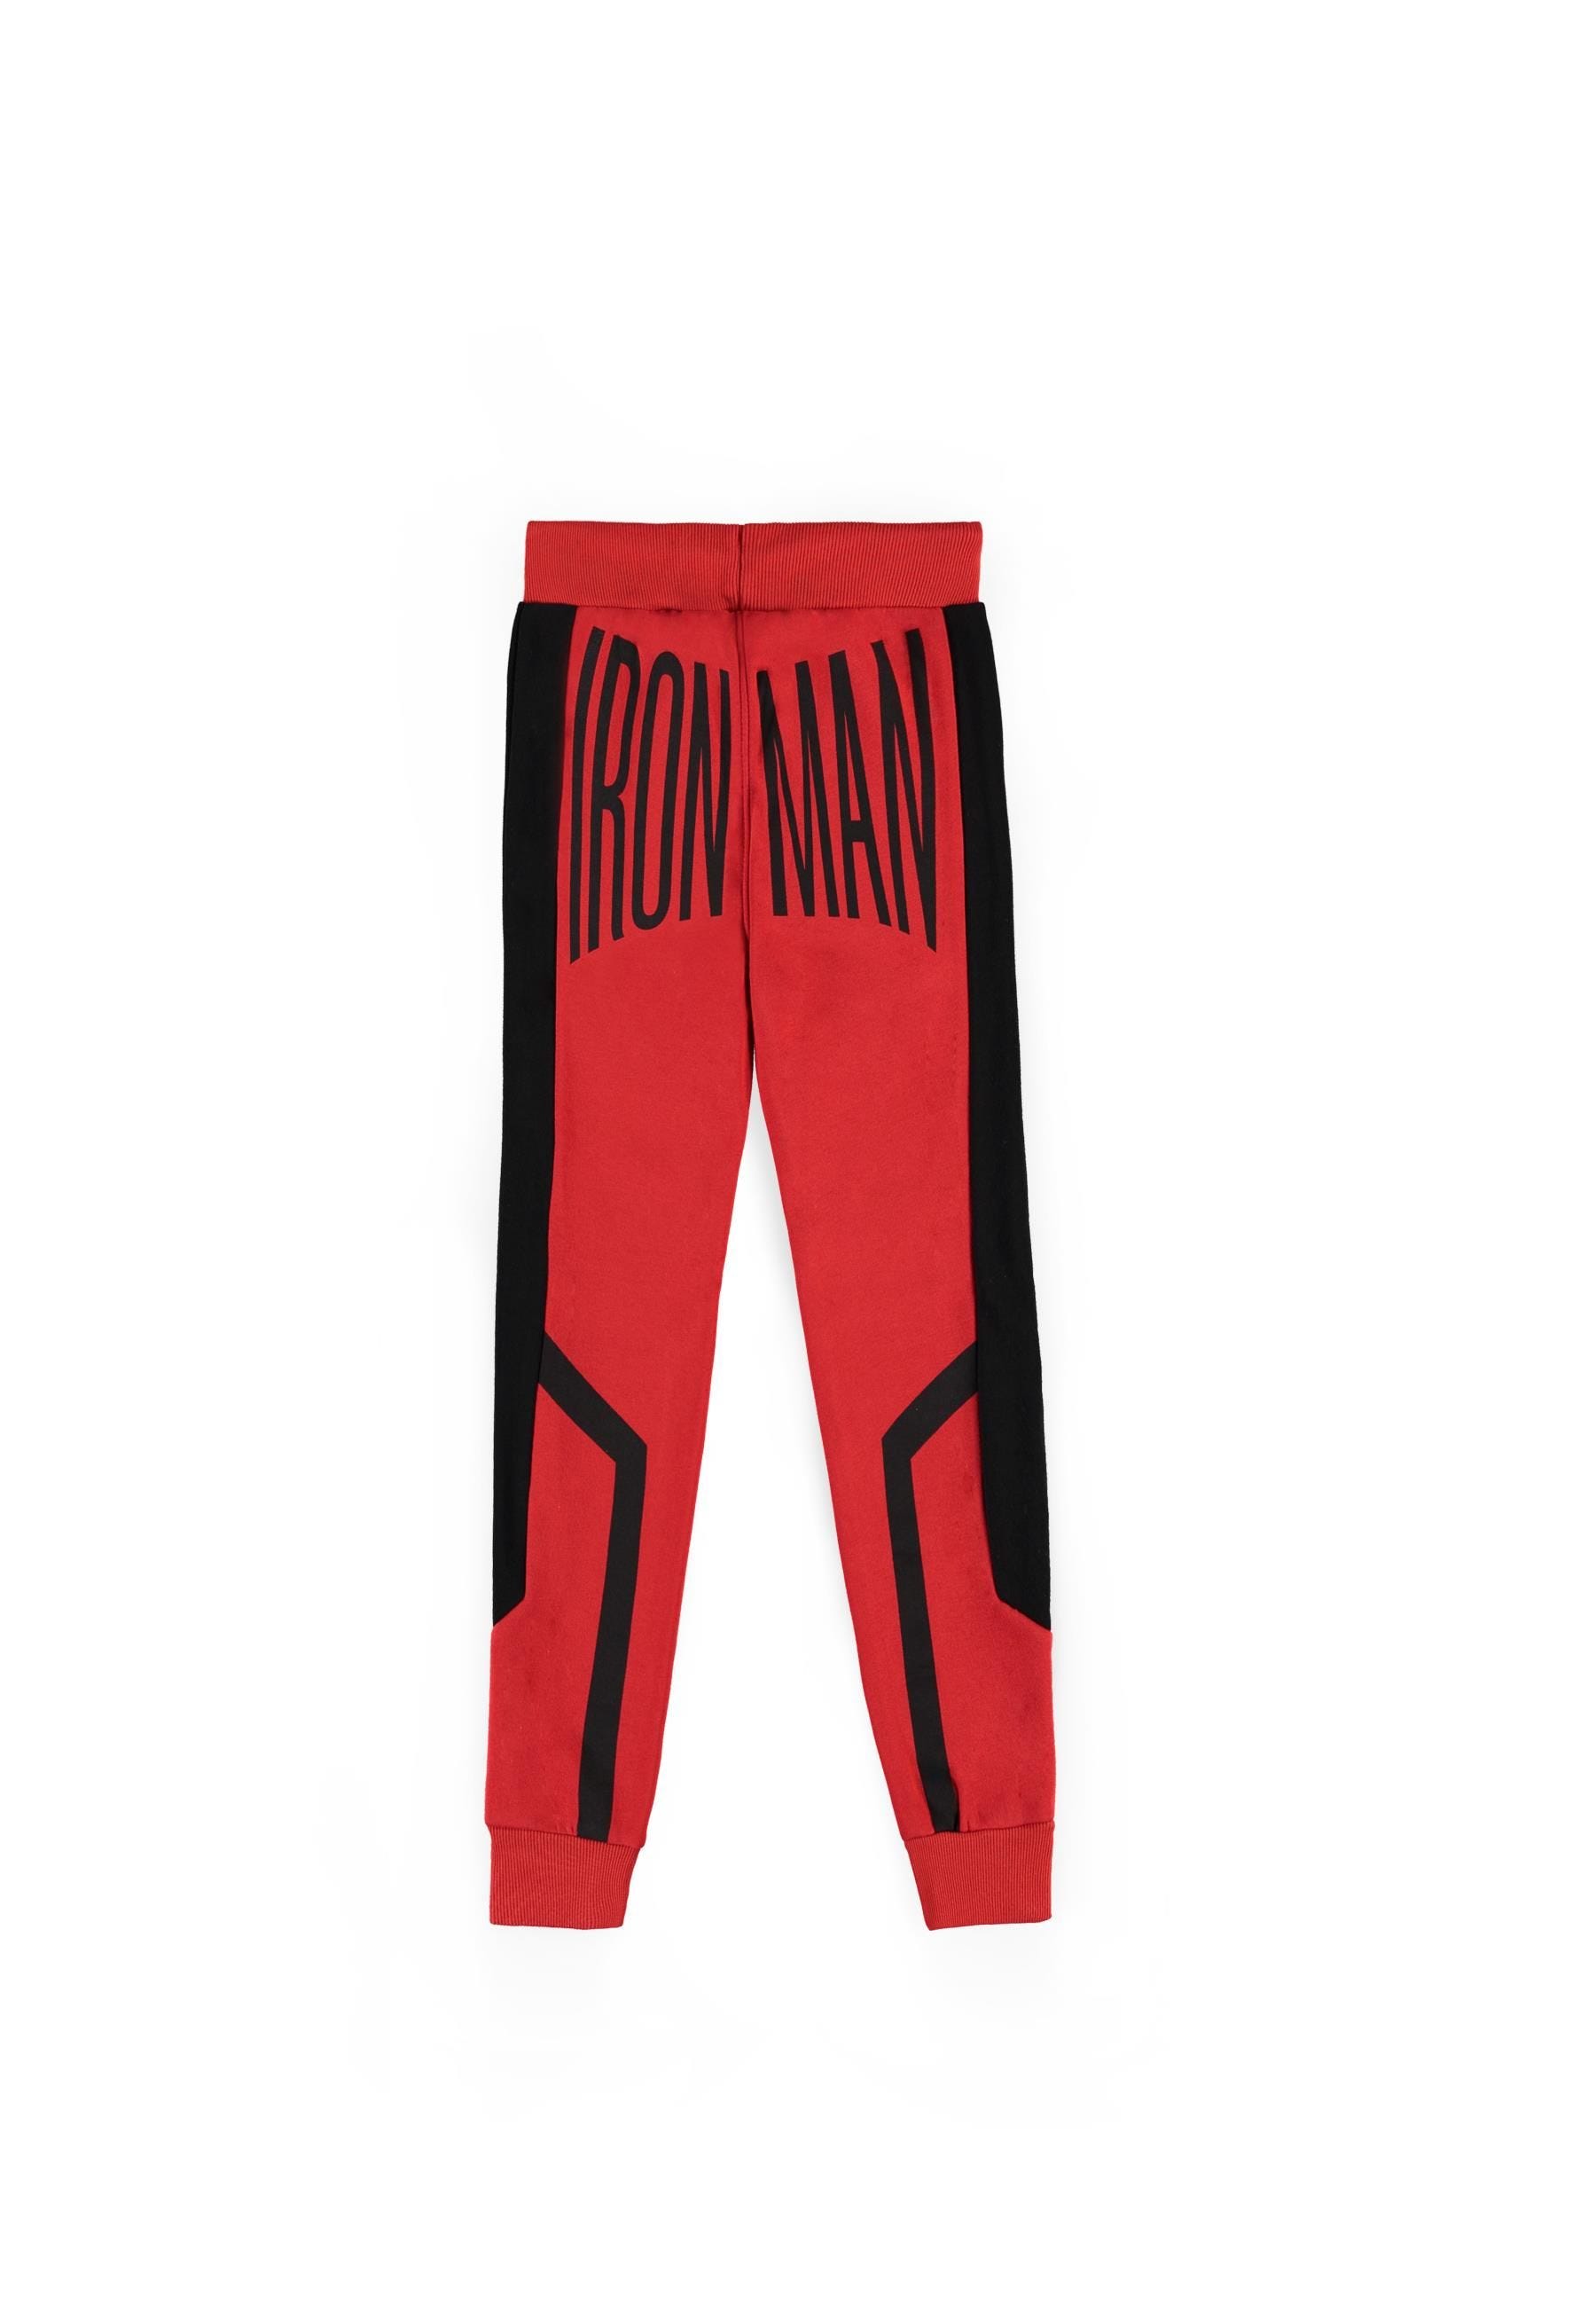 Pantalon chandal niño Marvel - Iron Man rojo 13 años 158cm - 14 años 164cm  Raíz MERCHAN-STORE Pantalones - Leggins